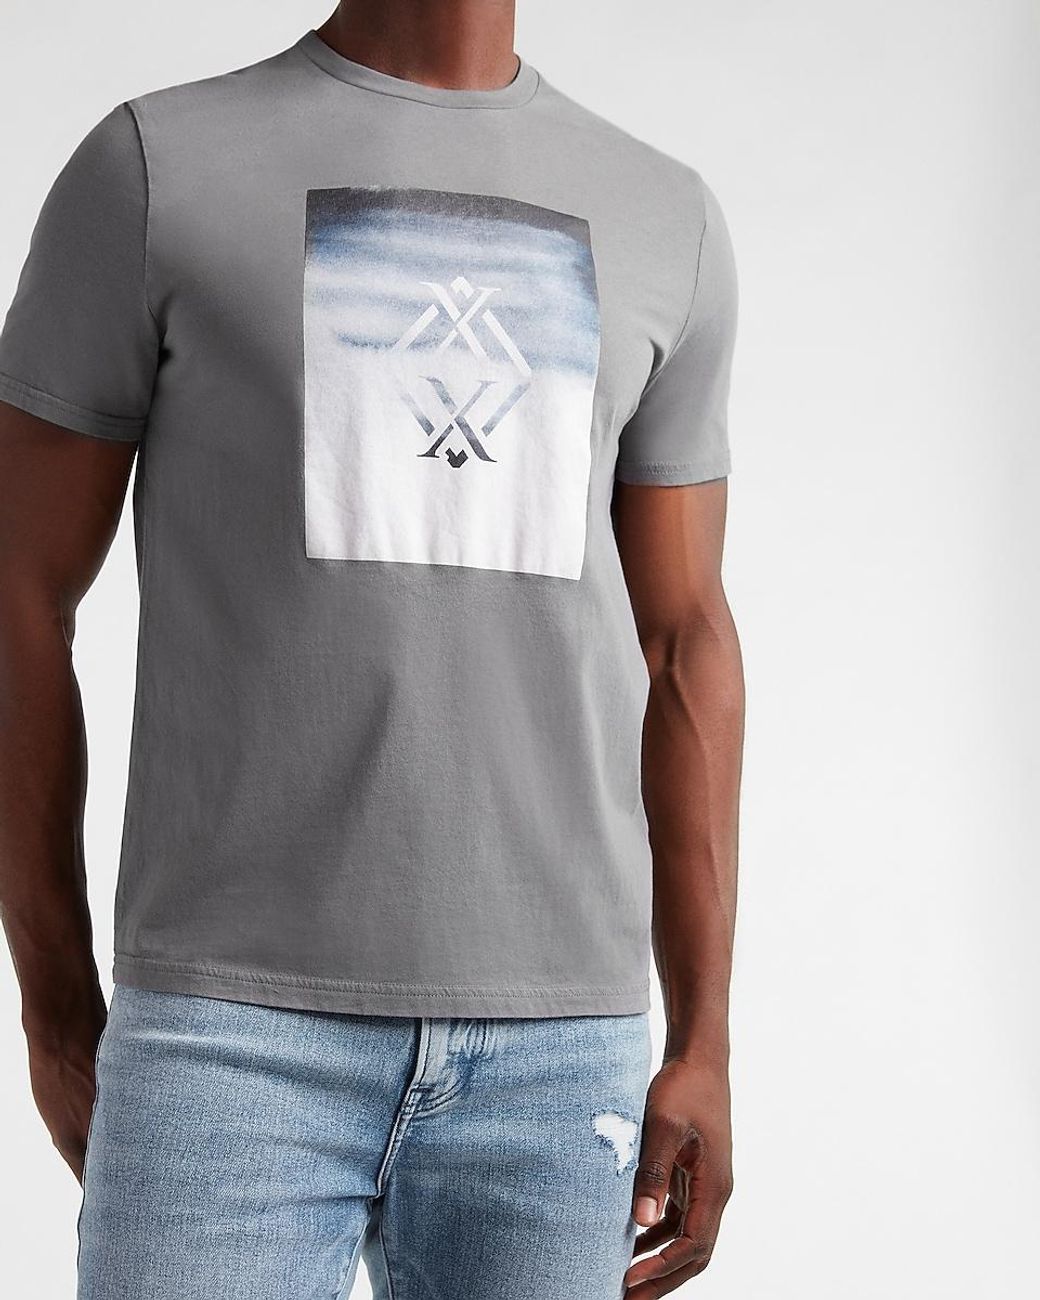 Express Cotton Gray Diamond Logo Graphic T-shirt Gray Xl Tall for Men ...